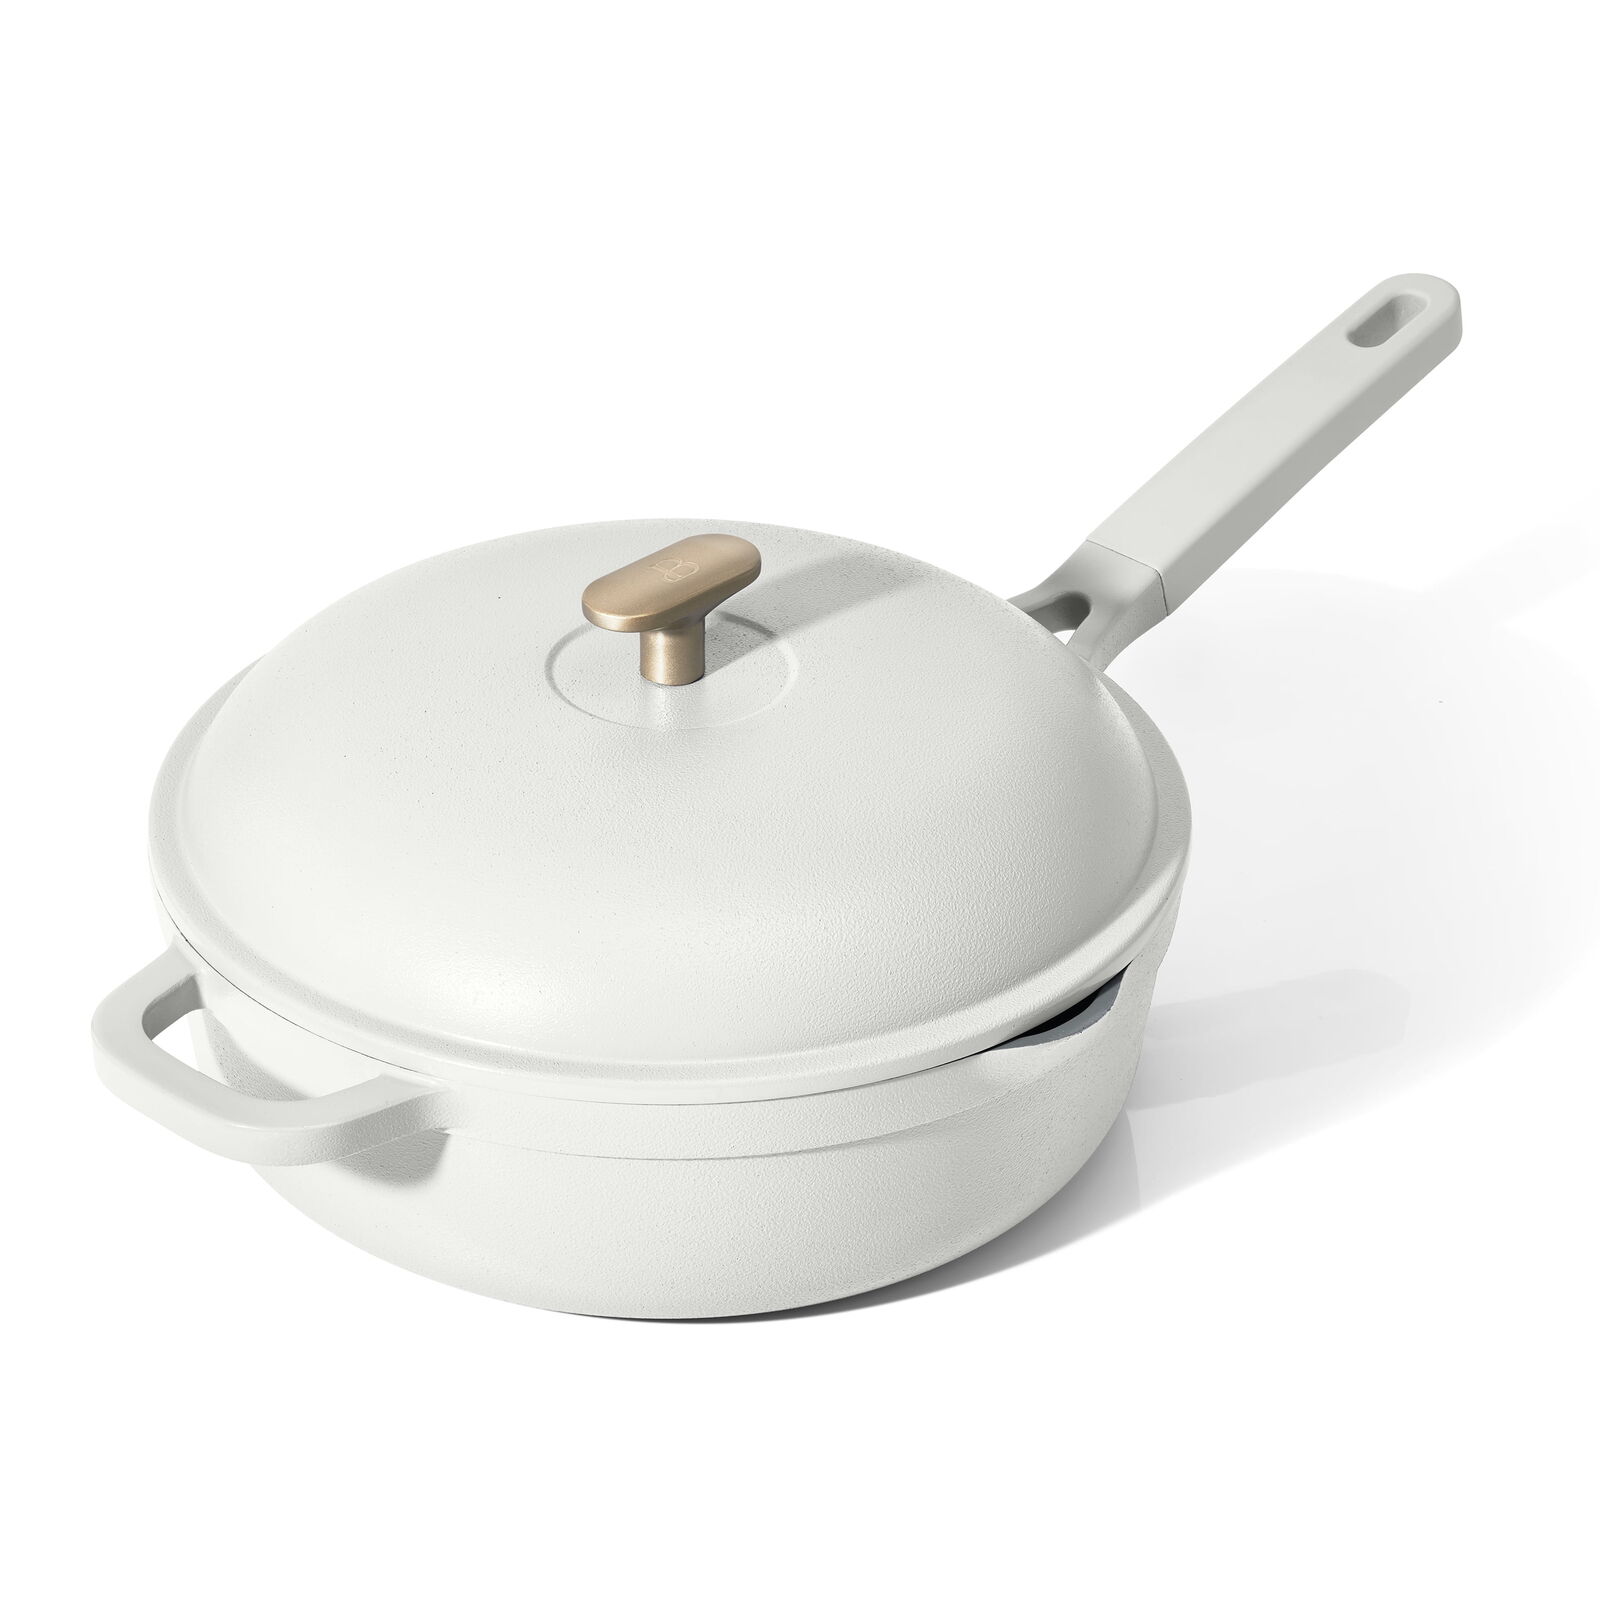 10 Cooking Functions Boil Strain Sauté 4QT Hero Pan with Steam Insert, 3 Pc Set